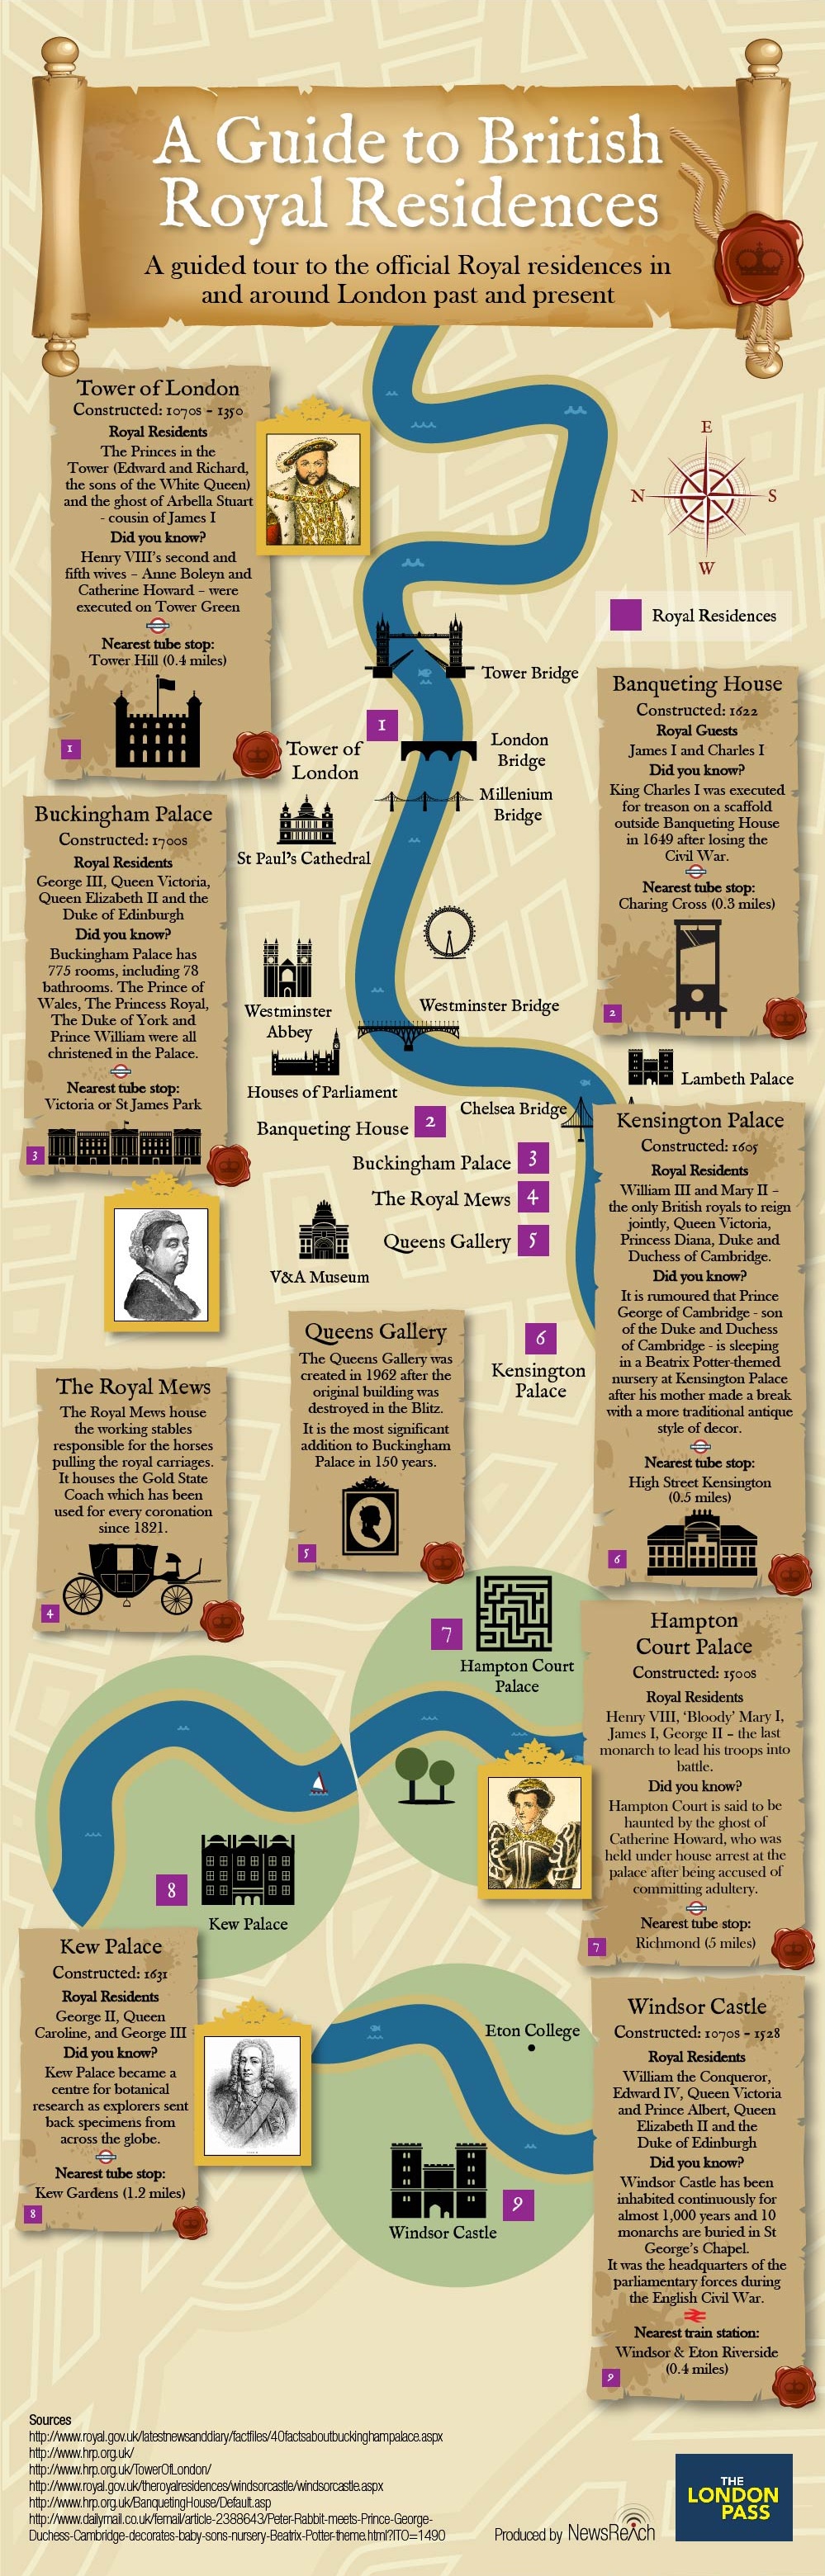 Historic Royal Residences in London